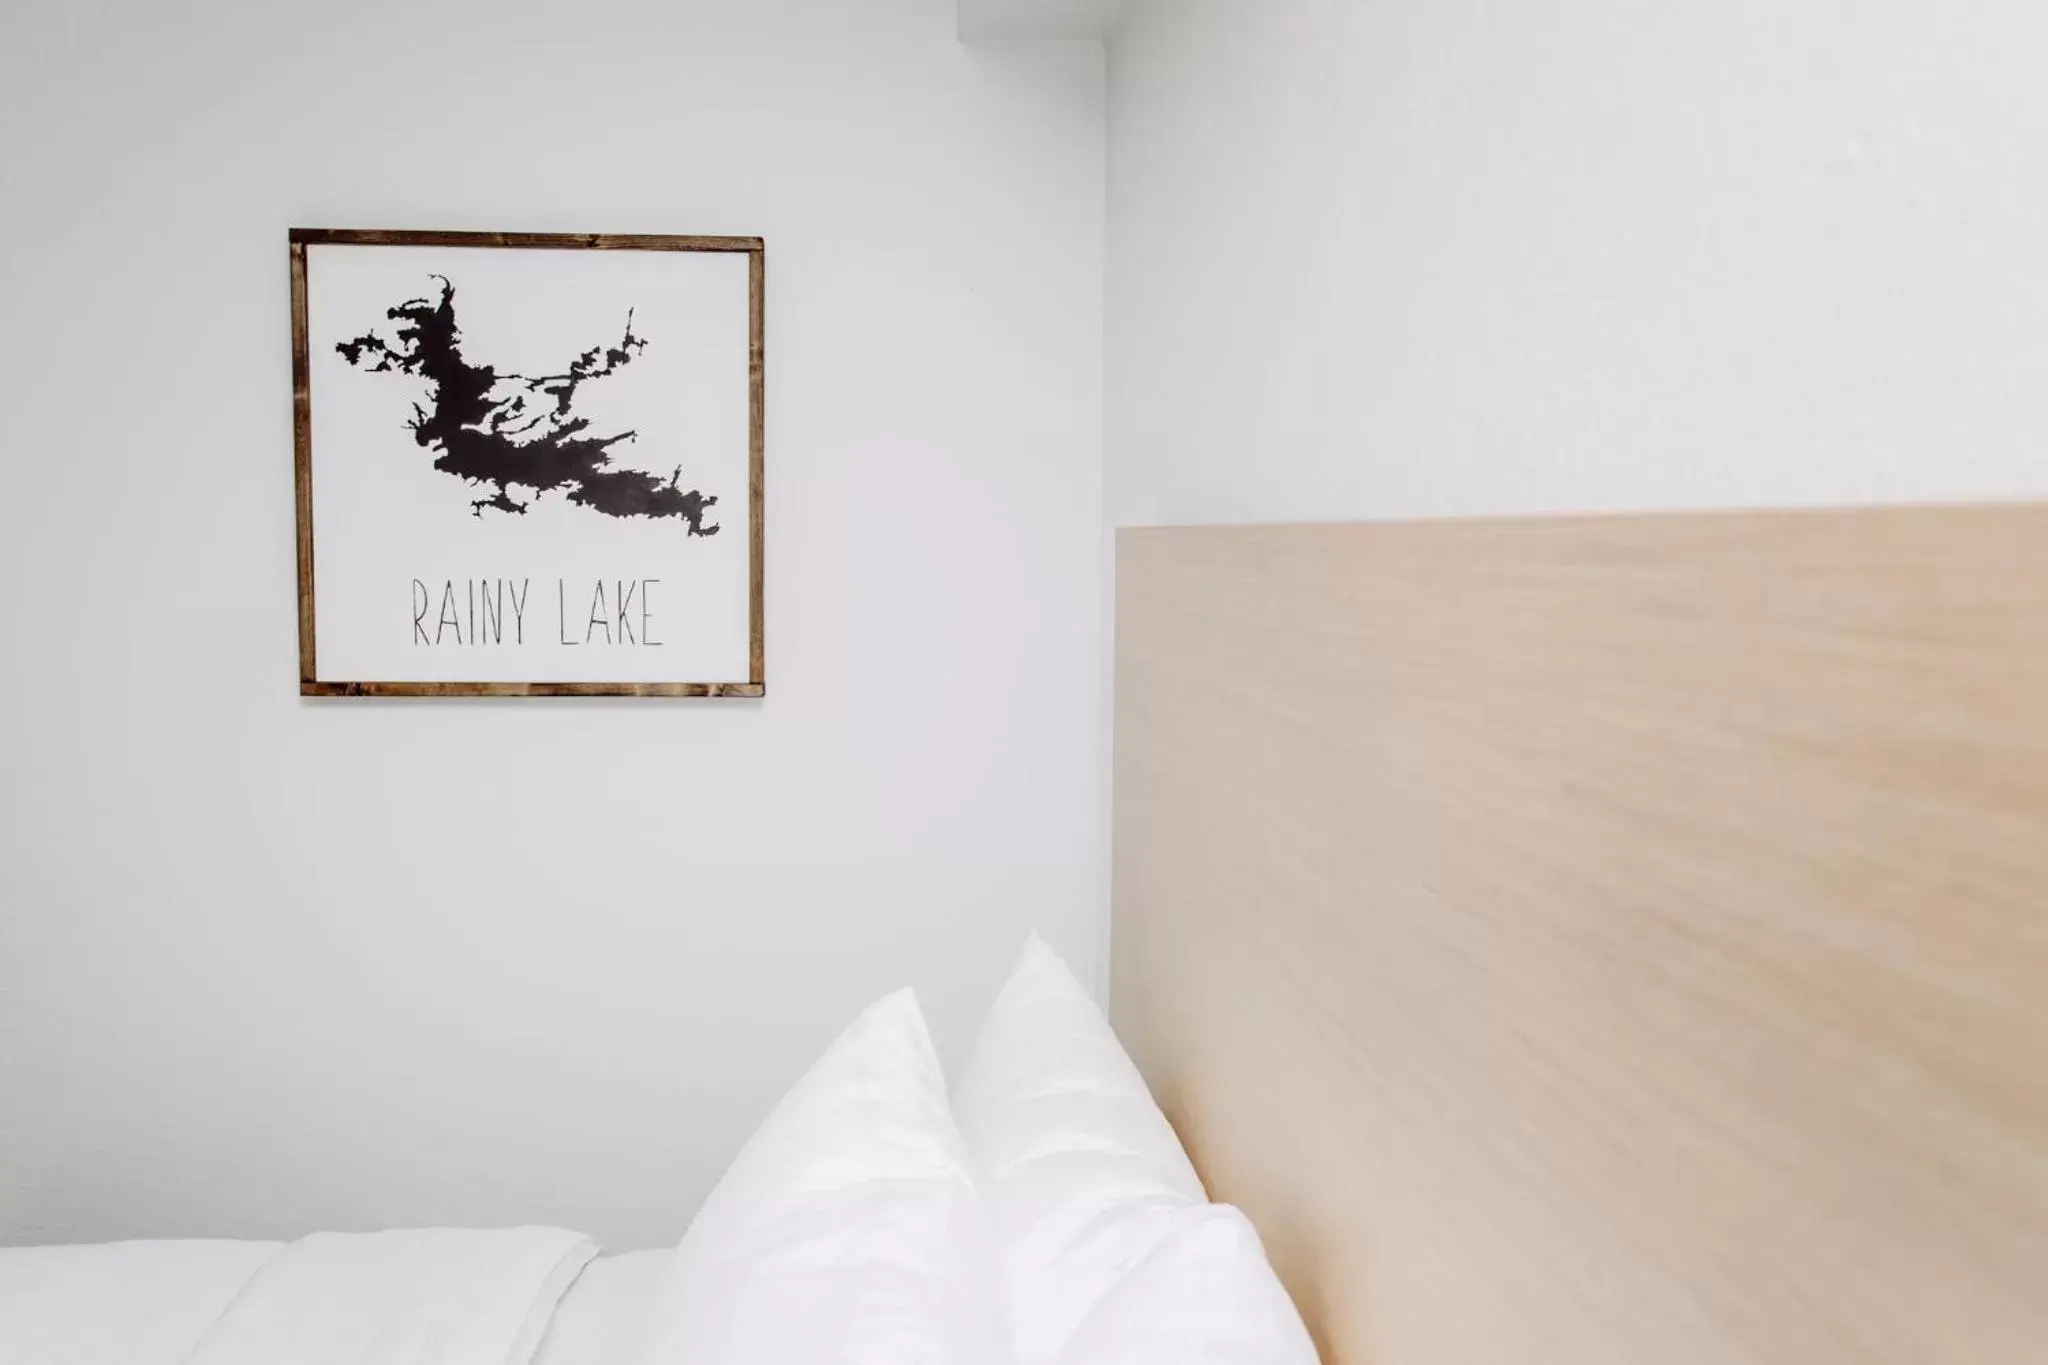 Bed in La Place Rendez-Vous Hotel